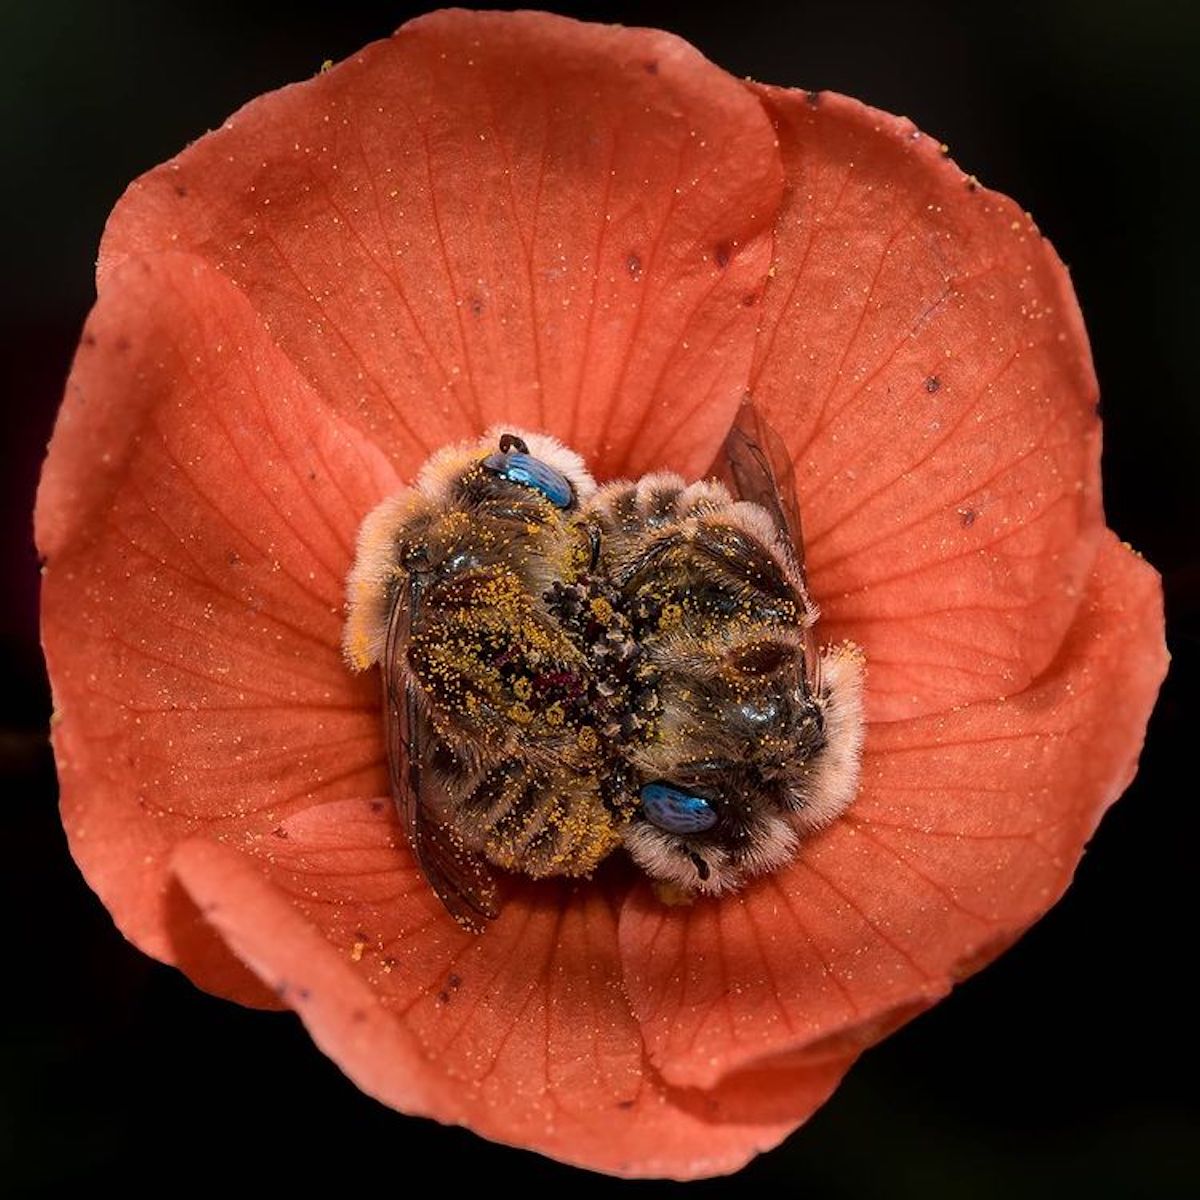 Bees Sleeping in a Globe Mallow Flower